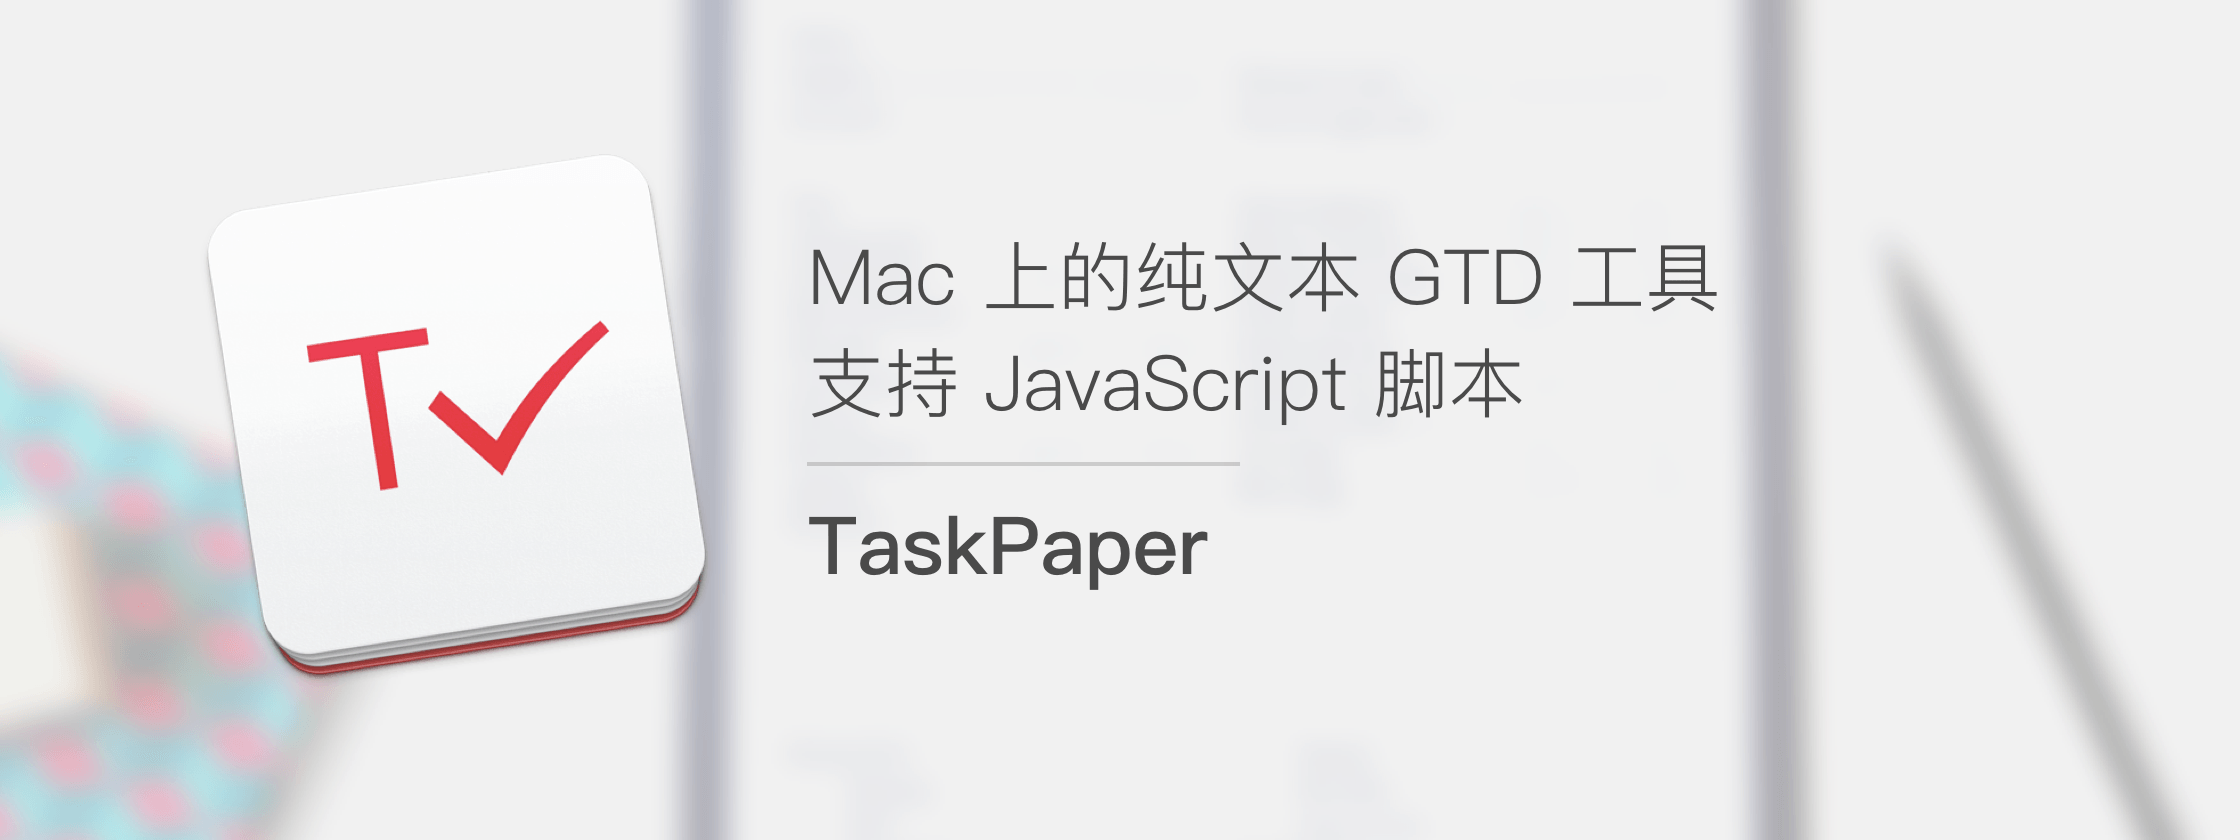 TaskPaper，Mac 上的纯文本 GTD 工具